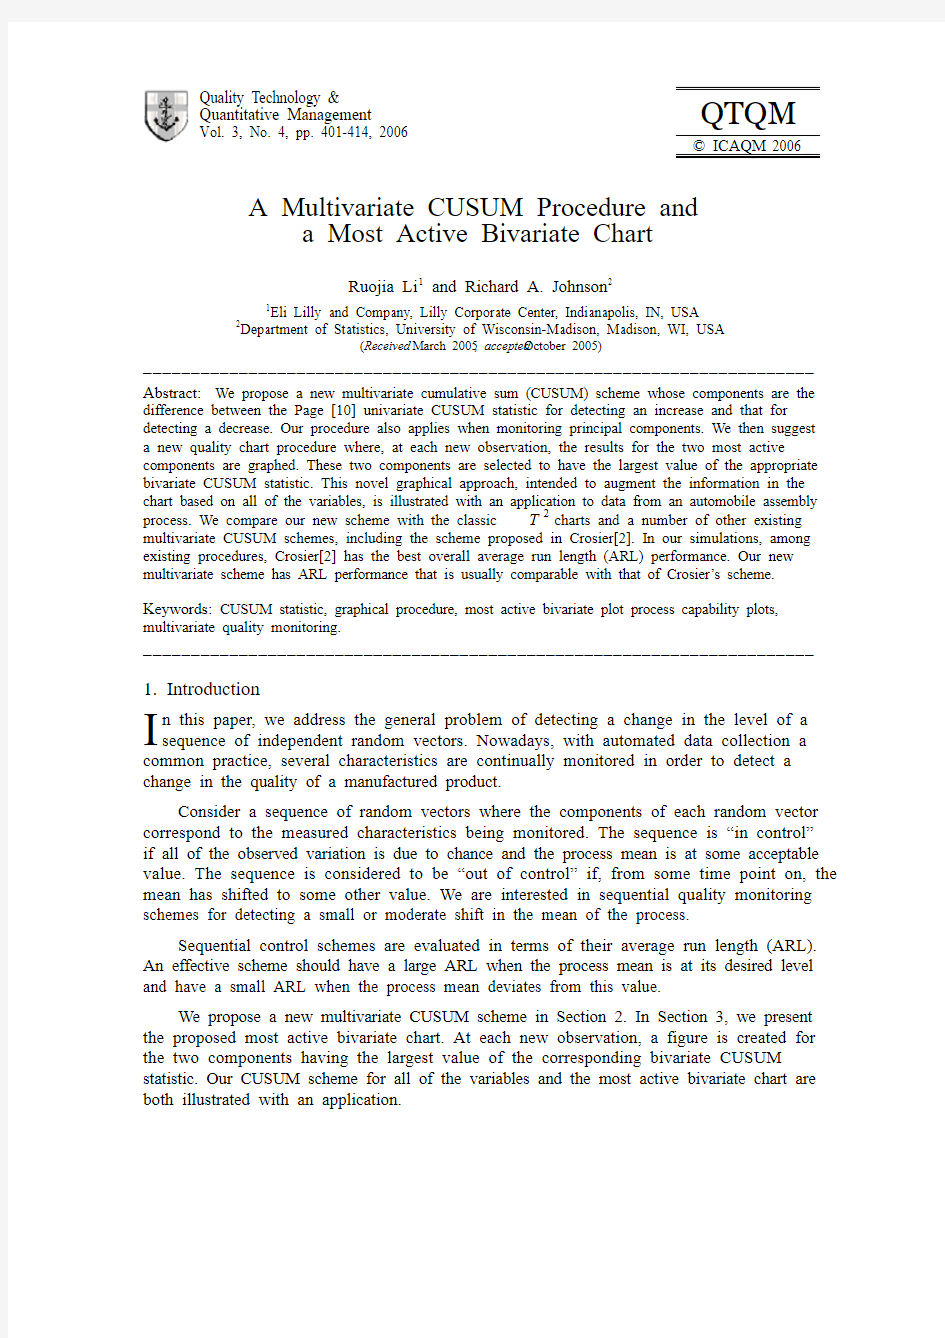 A Multivariate CUSUM Procedure and a Most Active Bivariate Chart